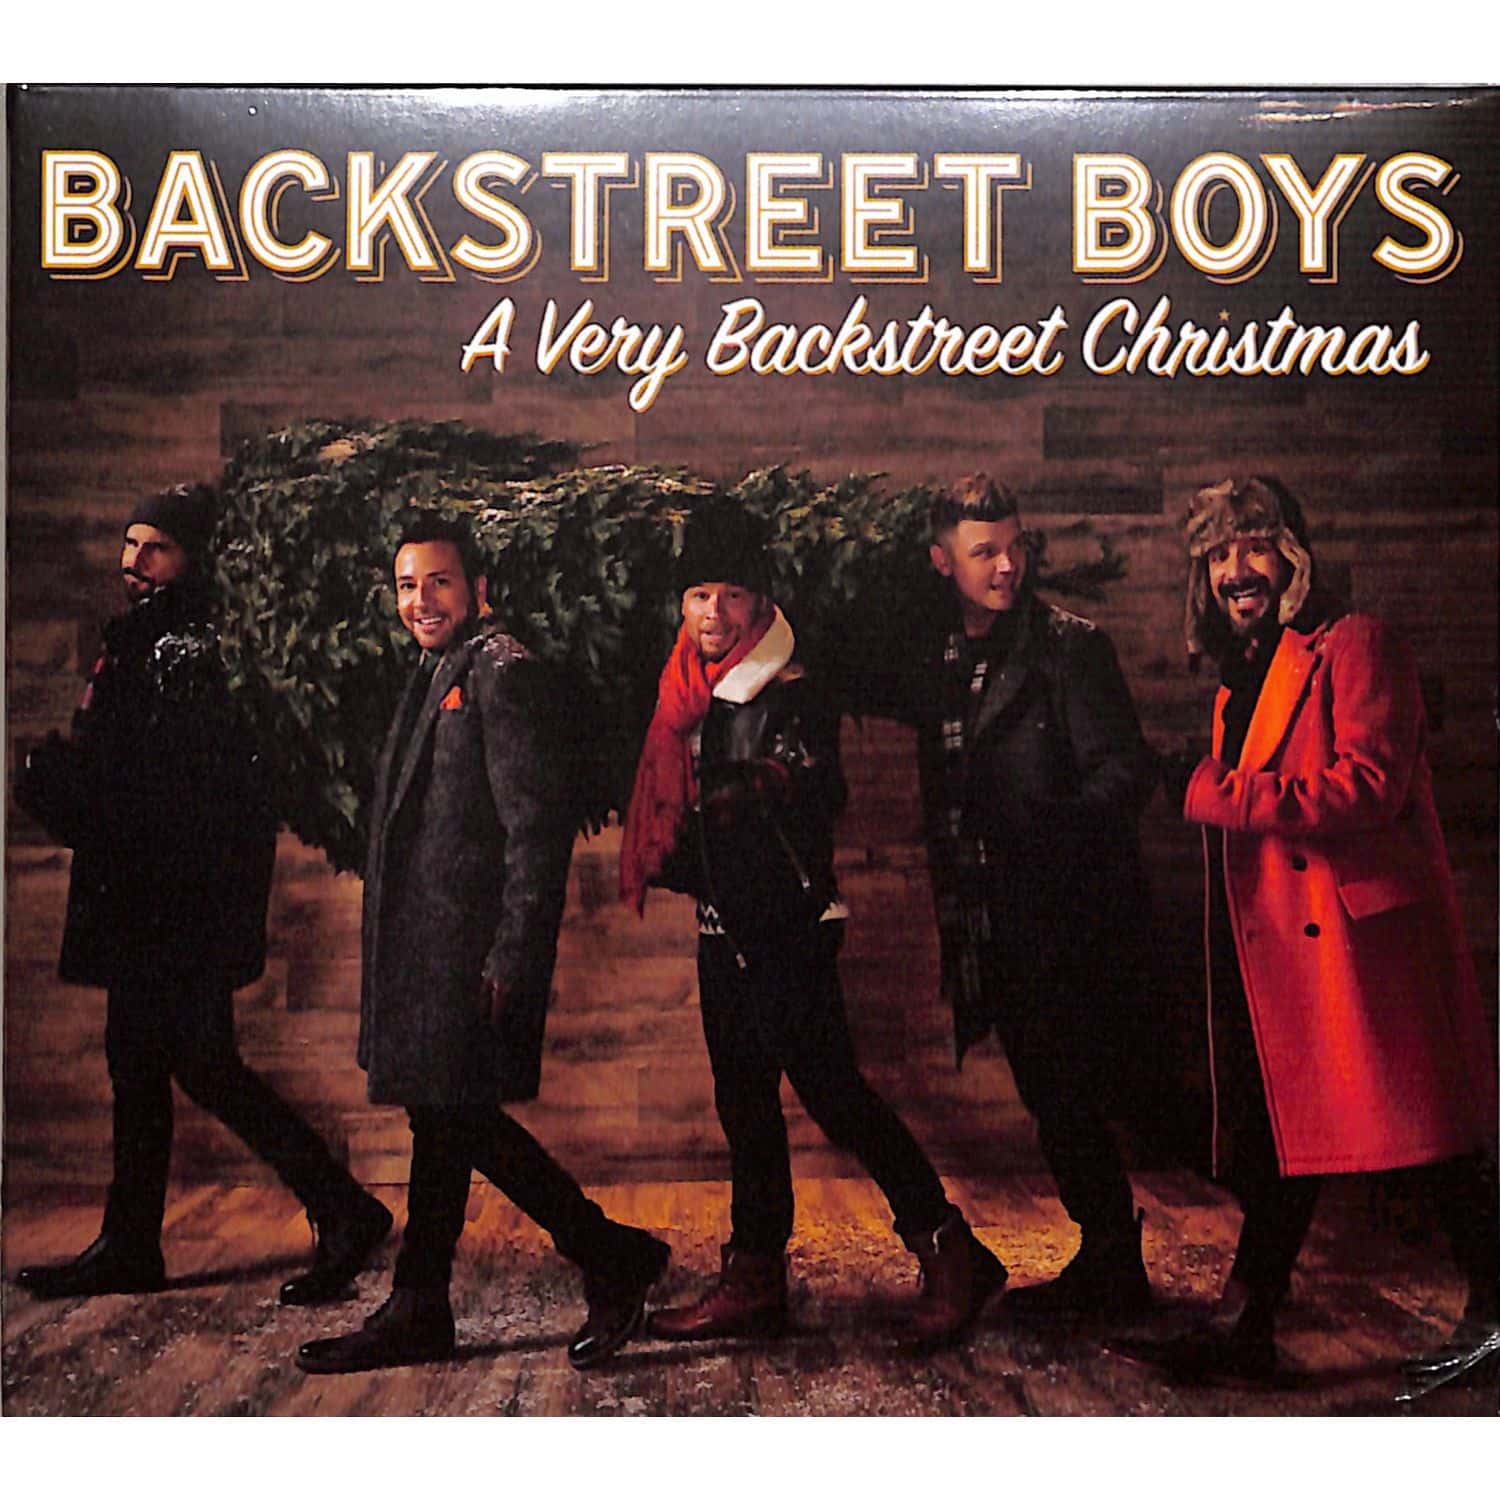 Backstreet Boys - A VERY BACKSTREET CHRISTMAS 